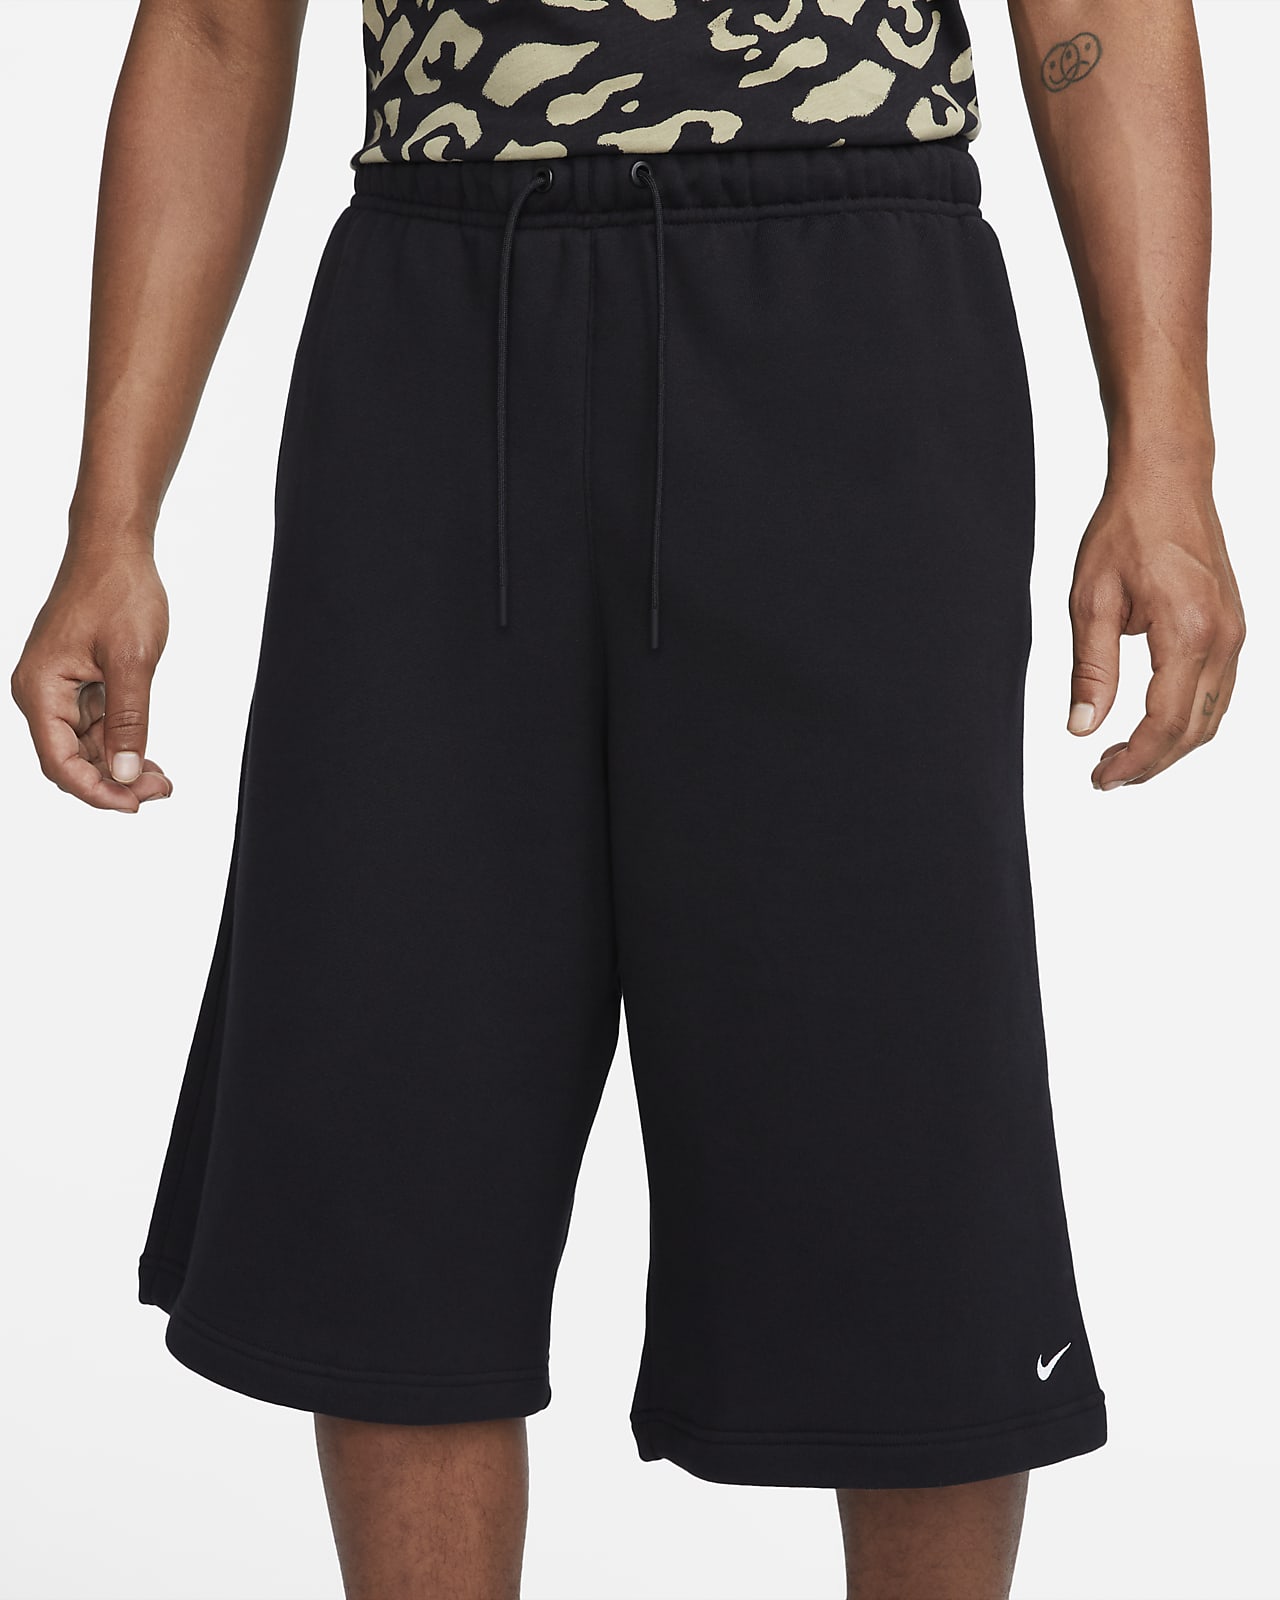 Circa Shorts. Nike Men\'s Sportswear French Terry